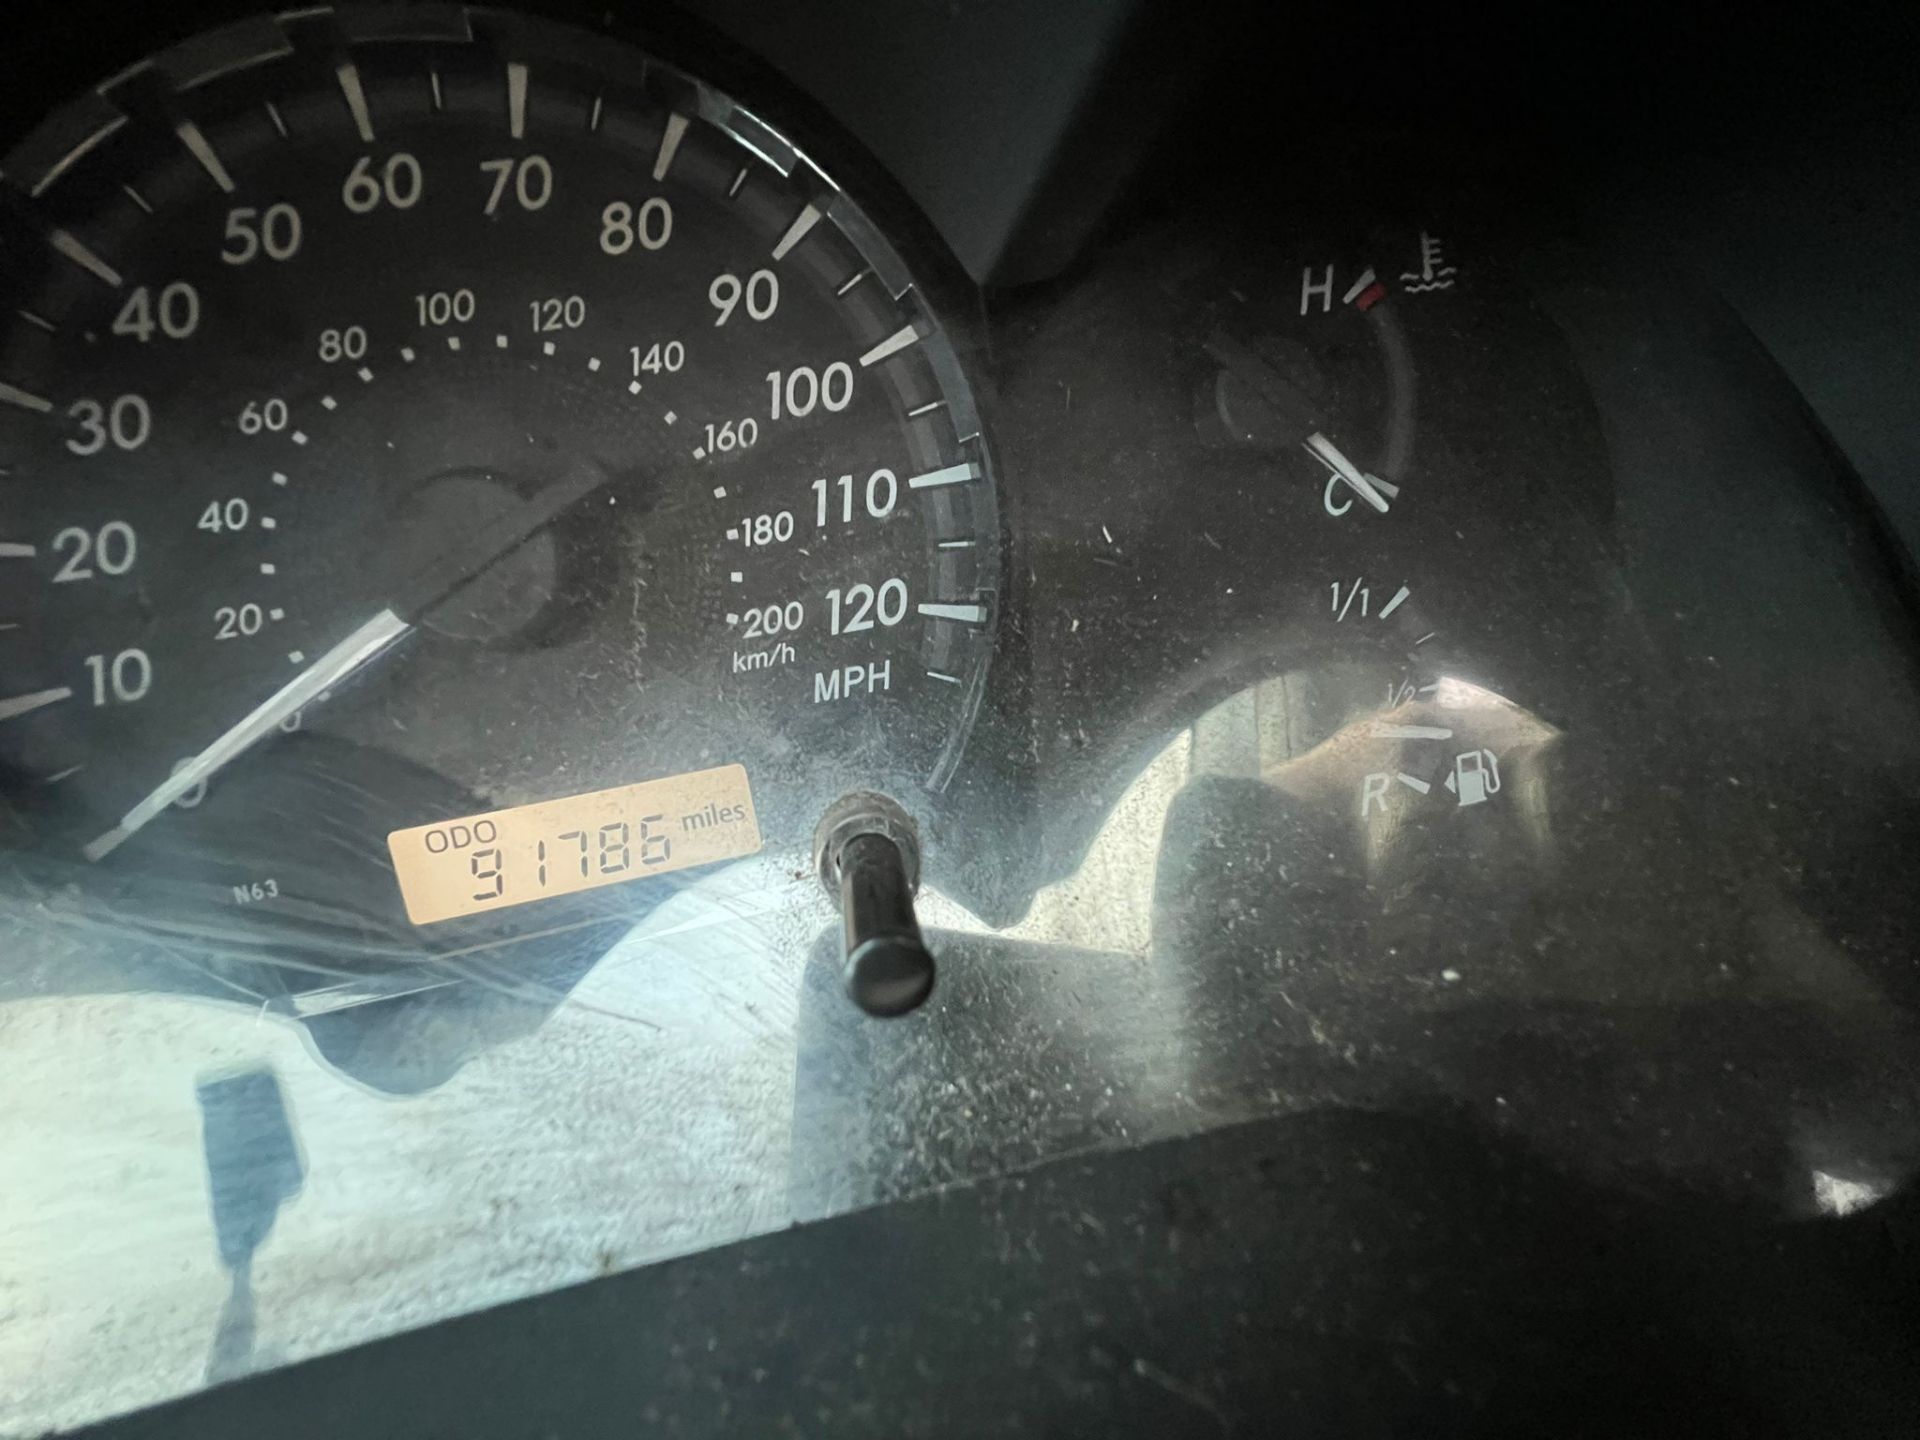 TOYOTA HILUX 91K MILES READY TO DRIVE AWAY - Bild 4 aus 13